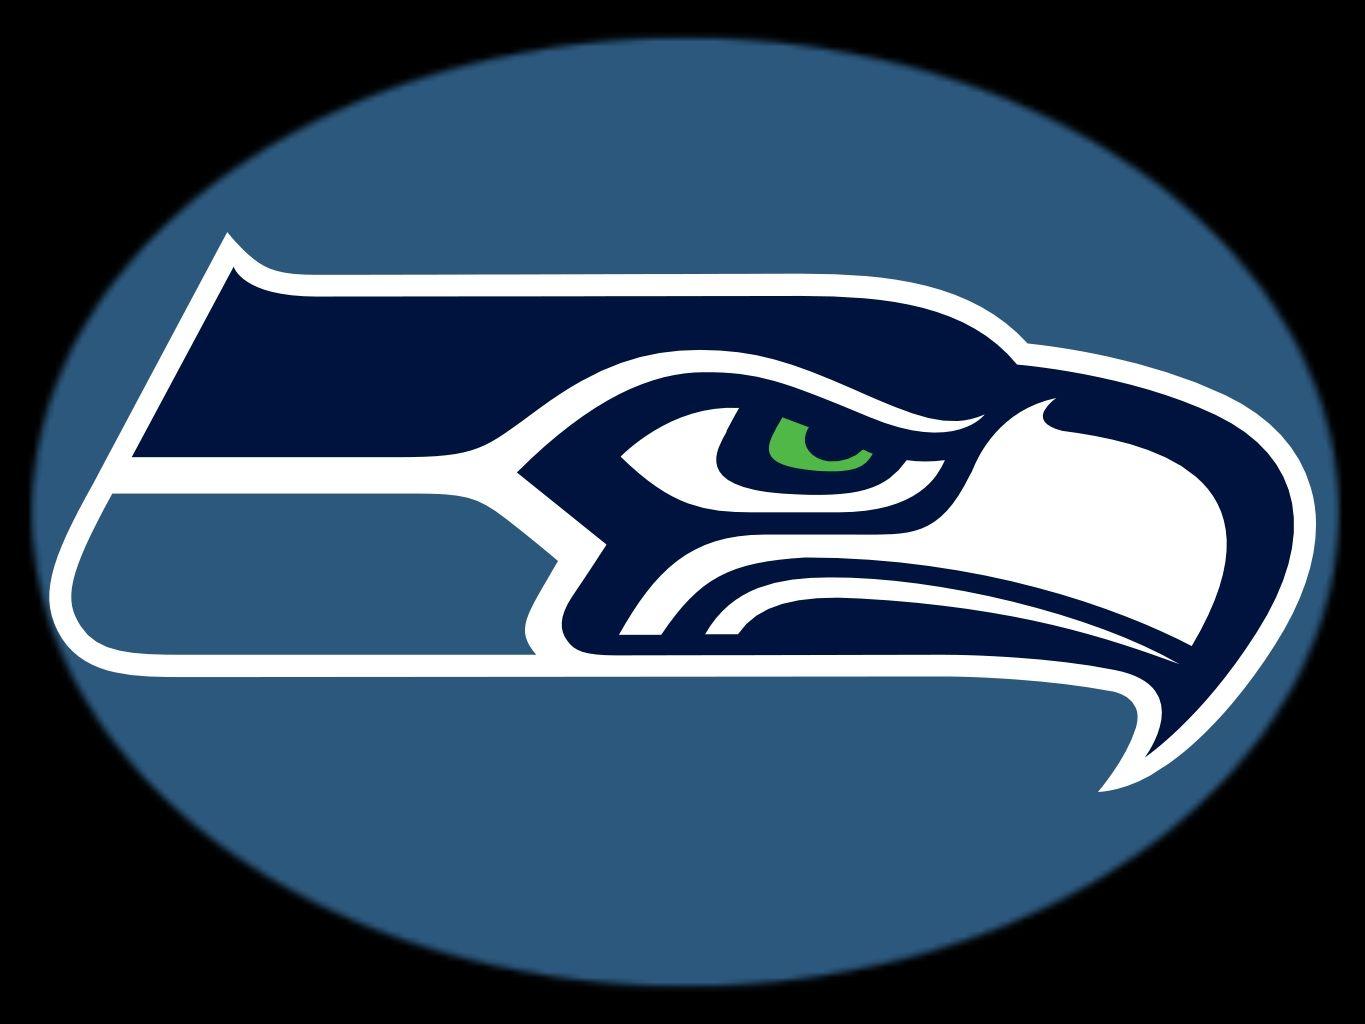 Seattle Seahawks Logo - Seattle Seahawks - NFL logo | Sports Teams and Athletes | Seahawks ...